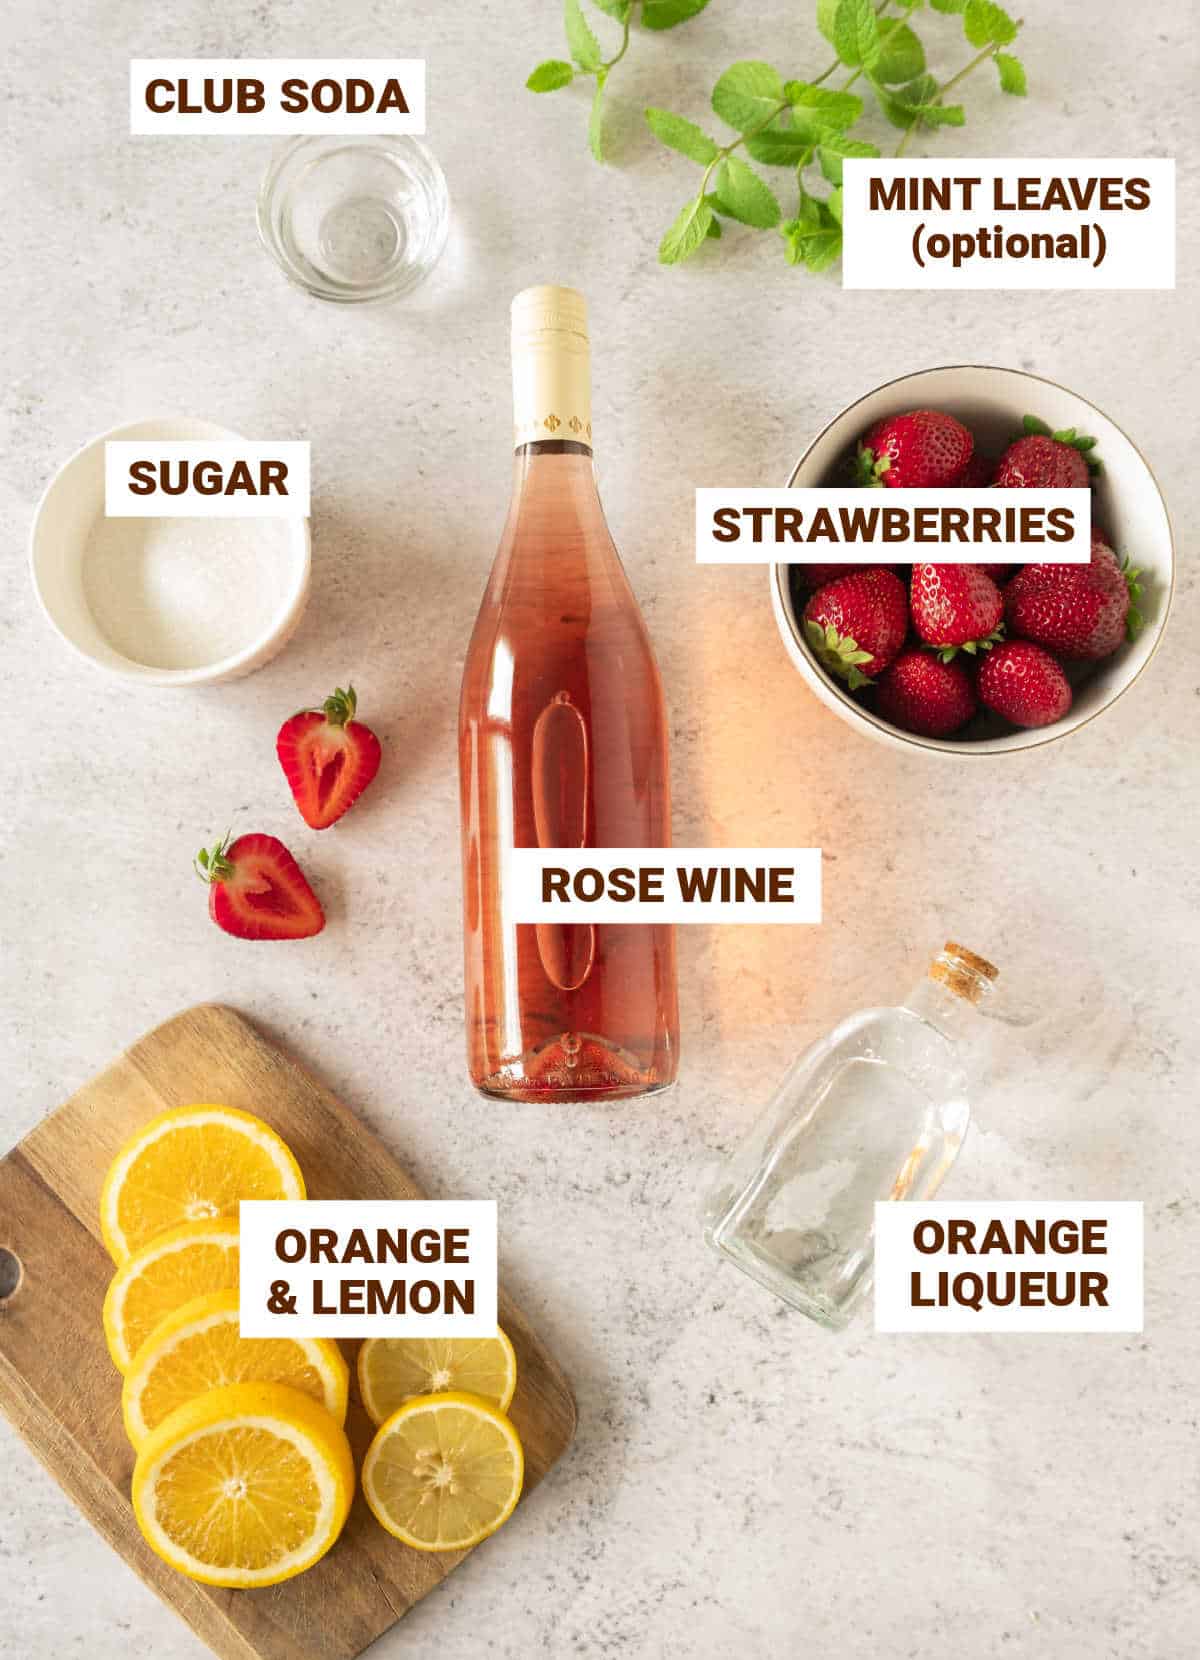 Light grey surface with ingredients for rose wine sangria including citrus slices, strawberries, sugar, mint, liqueur bottle.